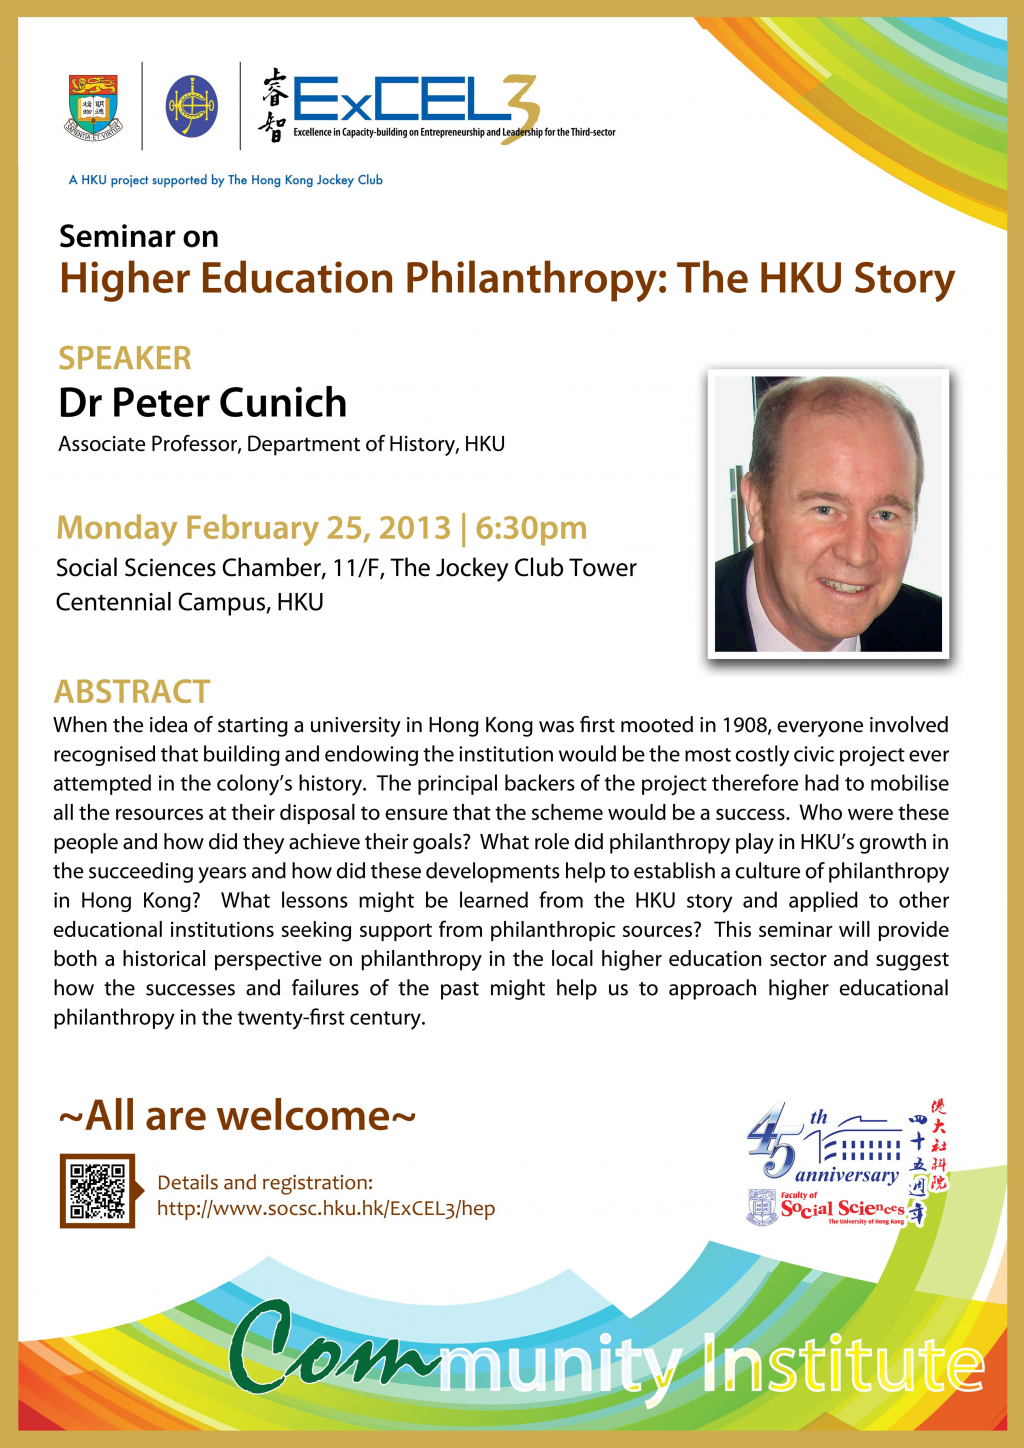 Seminar on Higher Education Philanthropy: The HKU Story